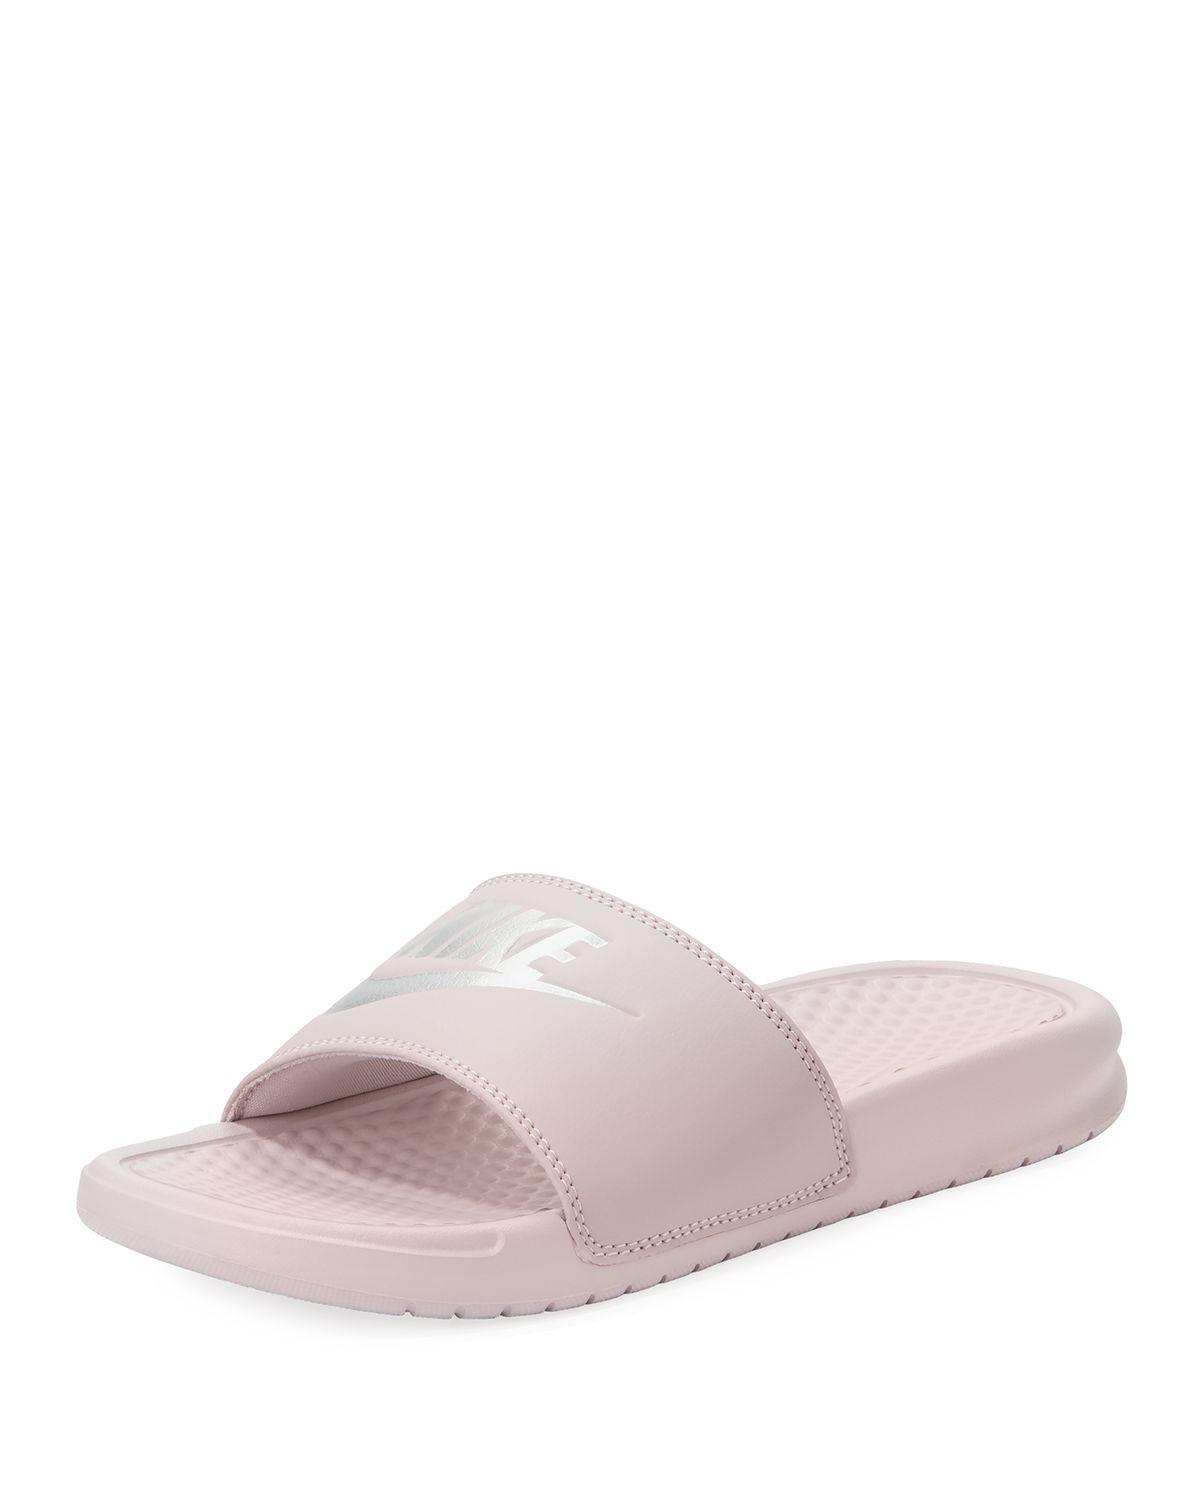 light pink nike sandals